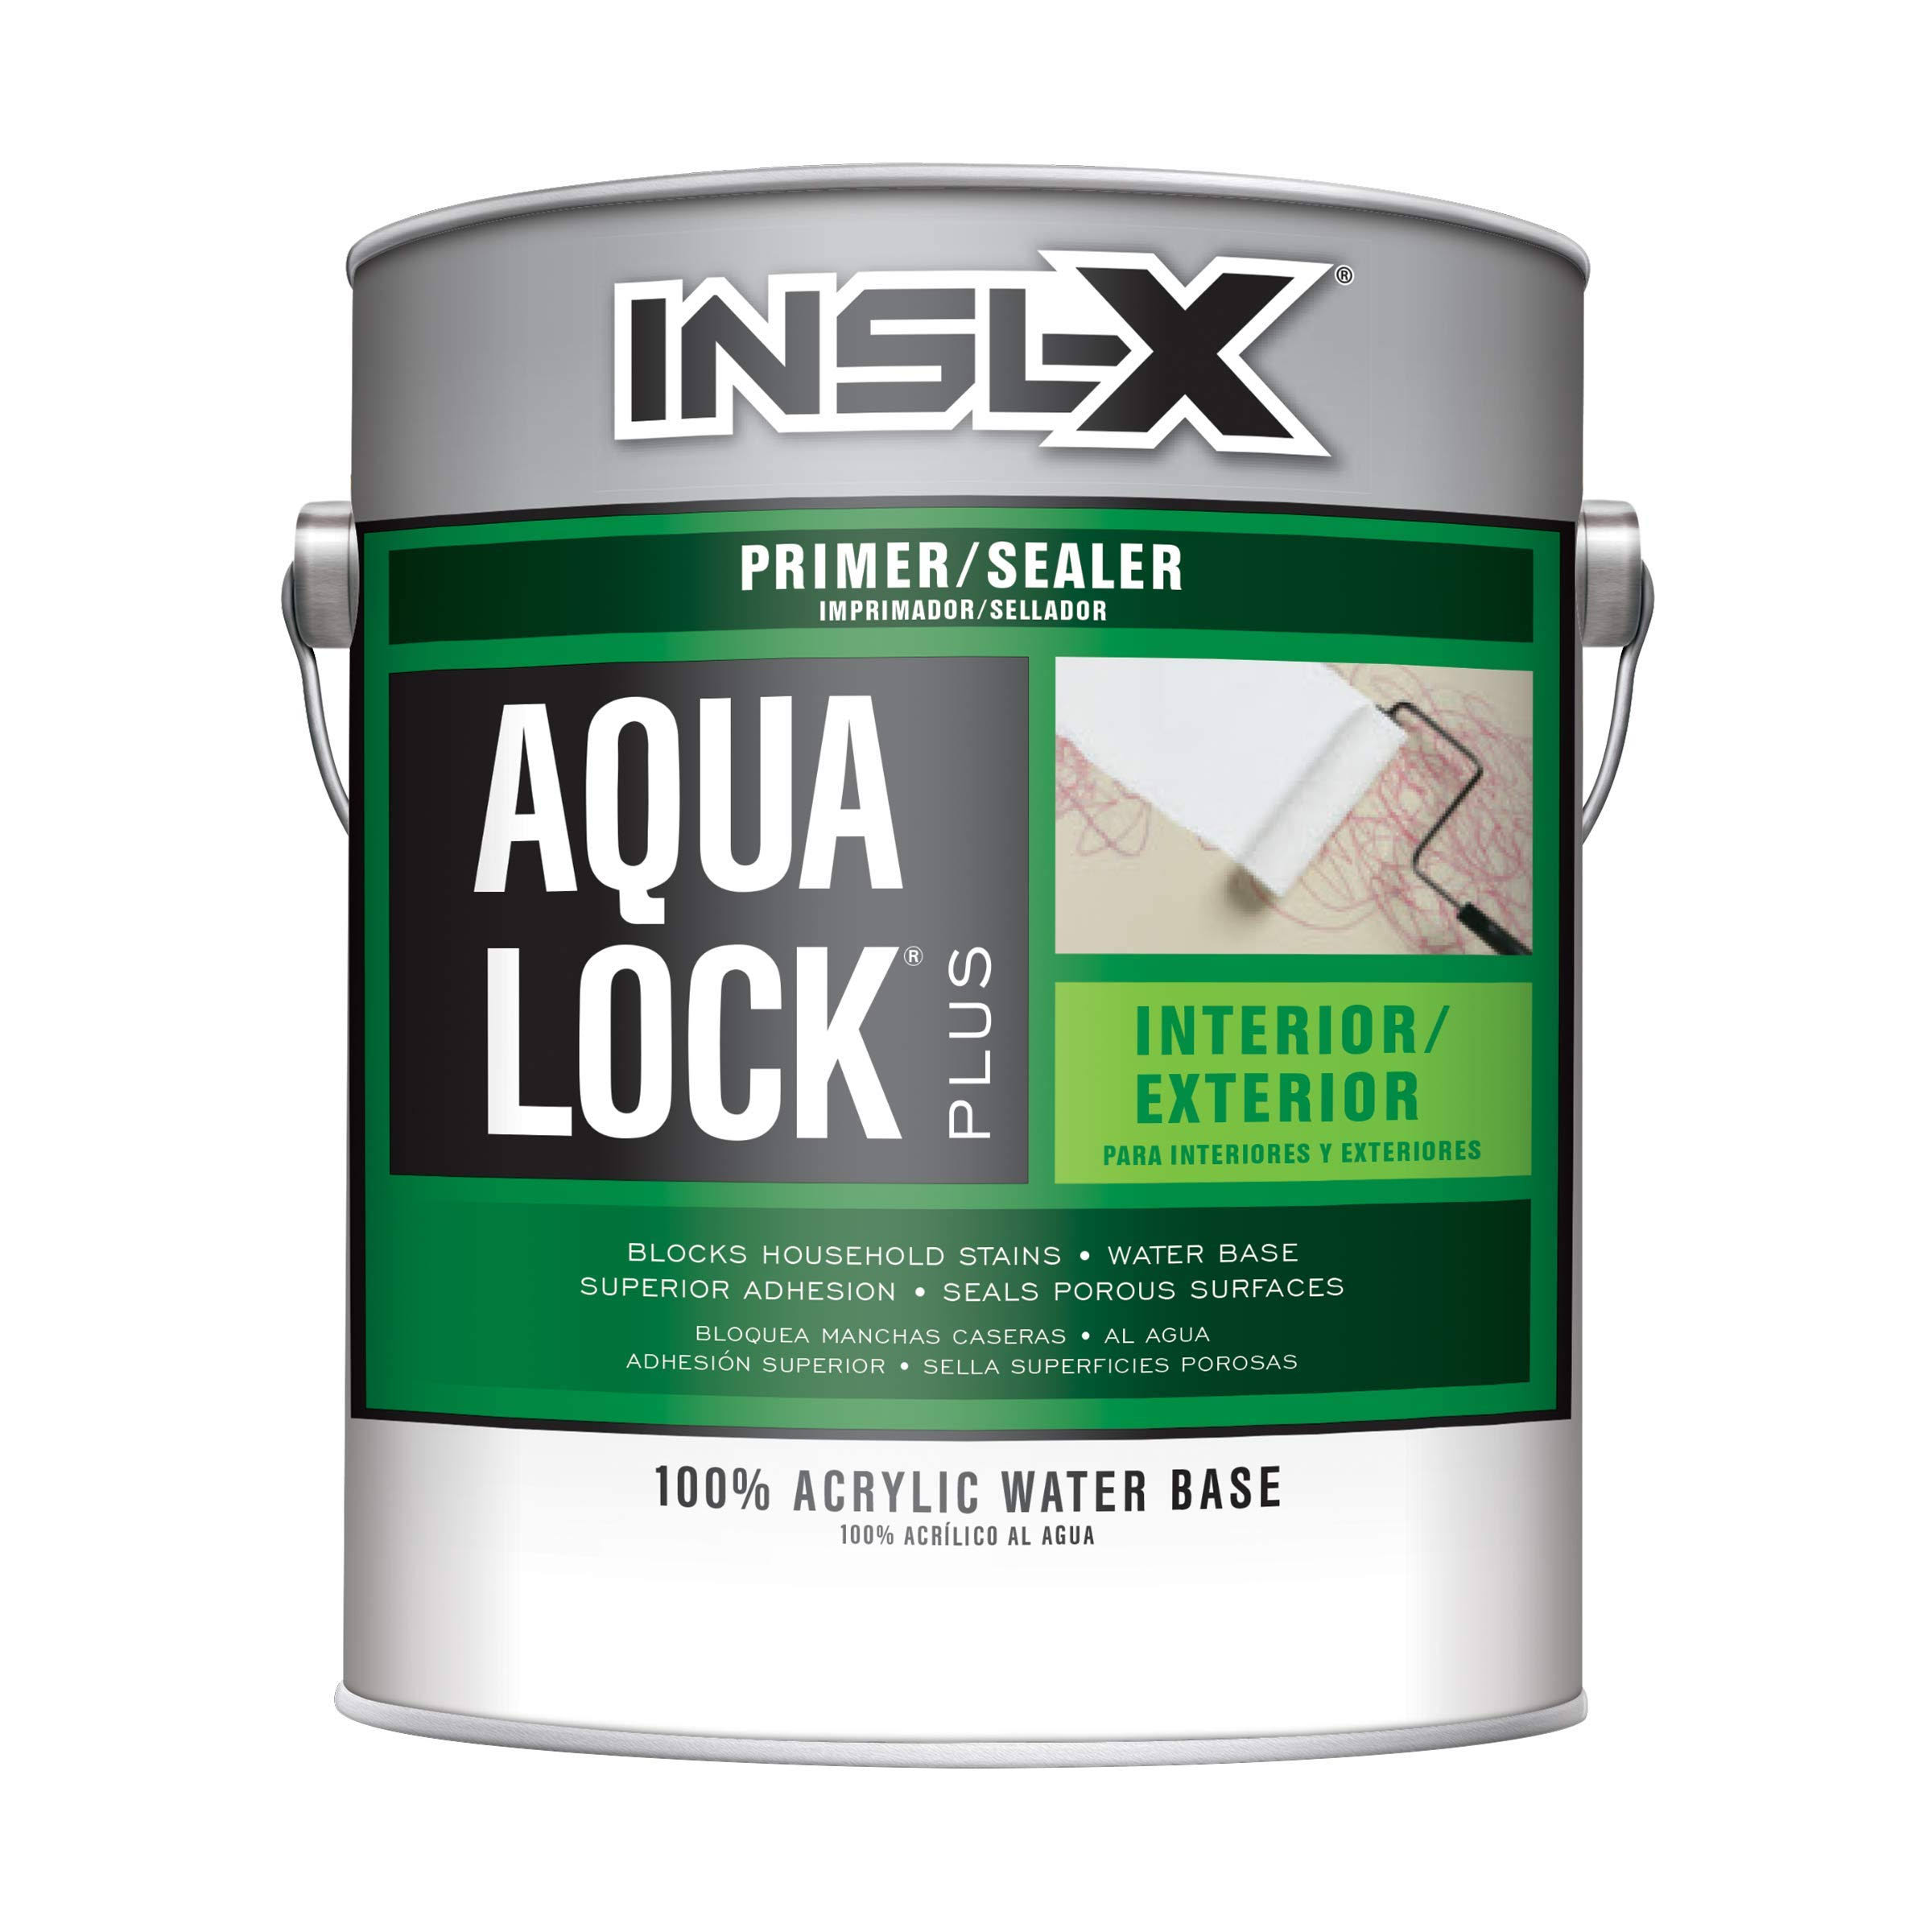 INSL-X Aqua Lock Primer Sealer